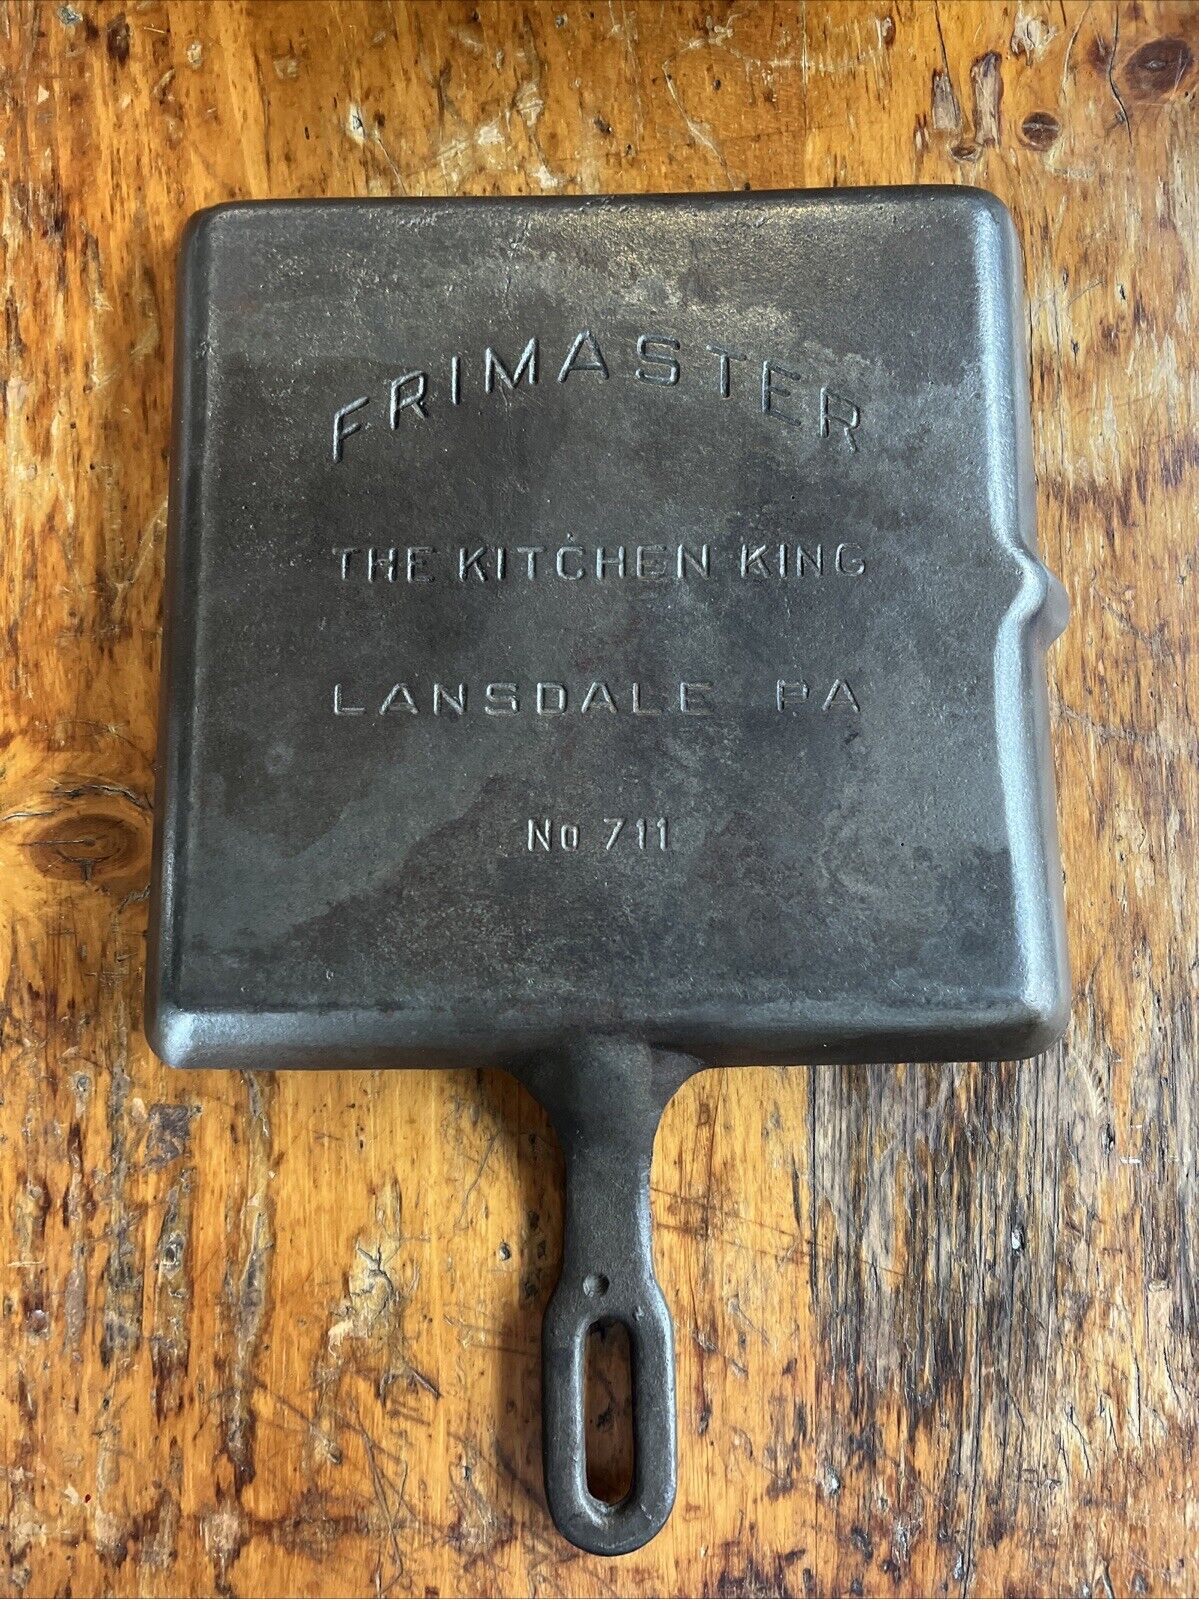 Vintage Rare Cast Iron Frimaster Pan The Kitchen King Landscape PA No.711